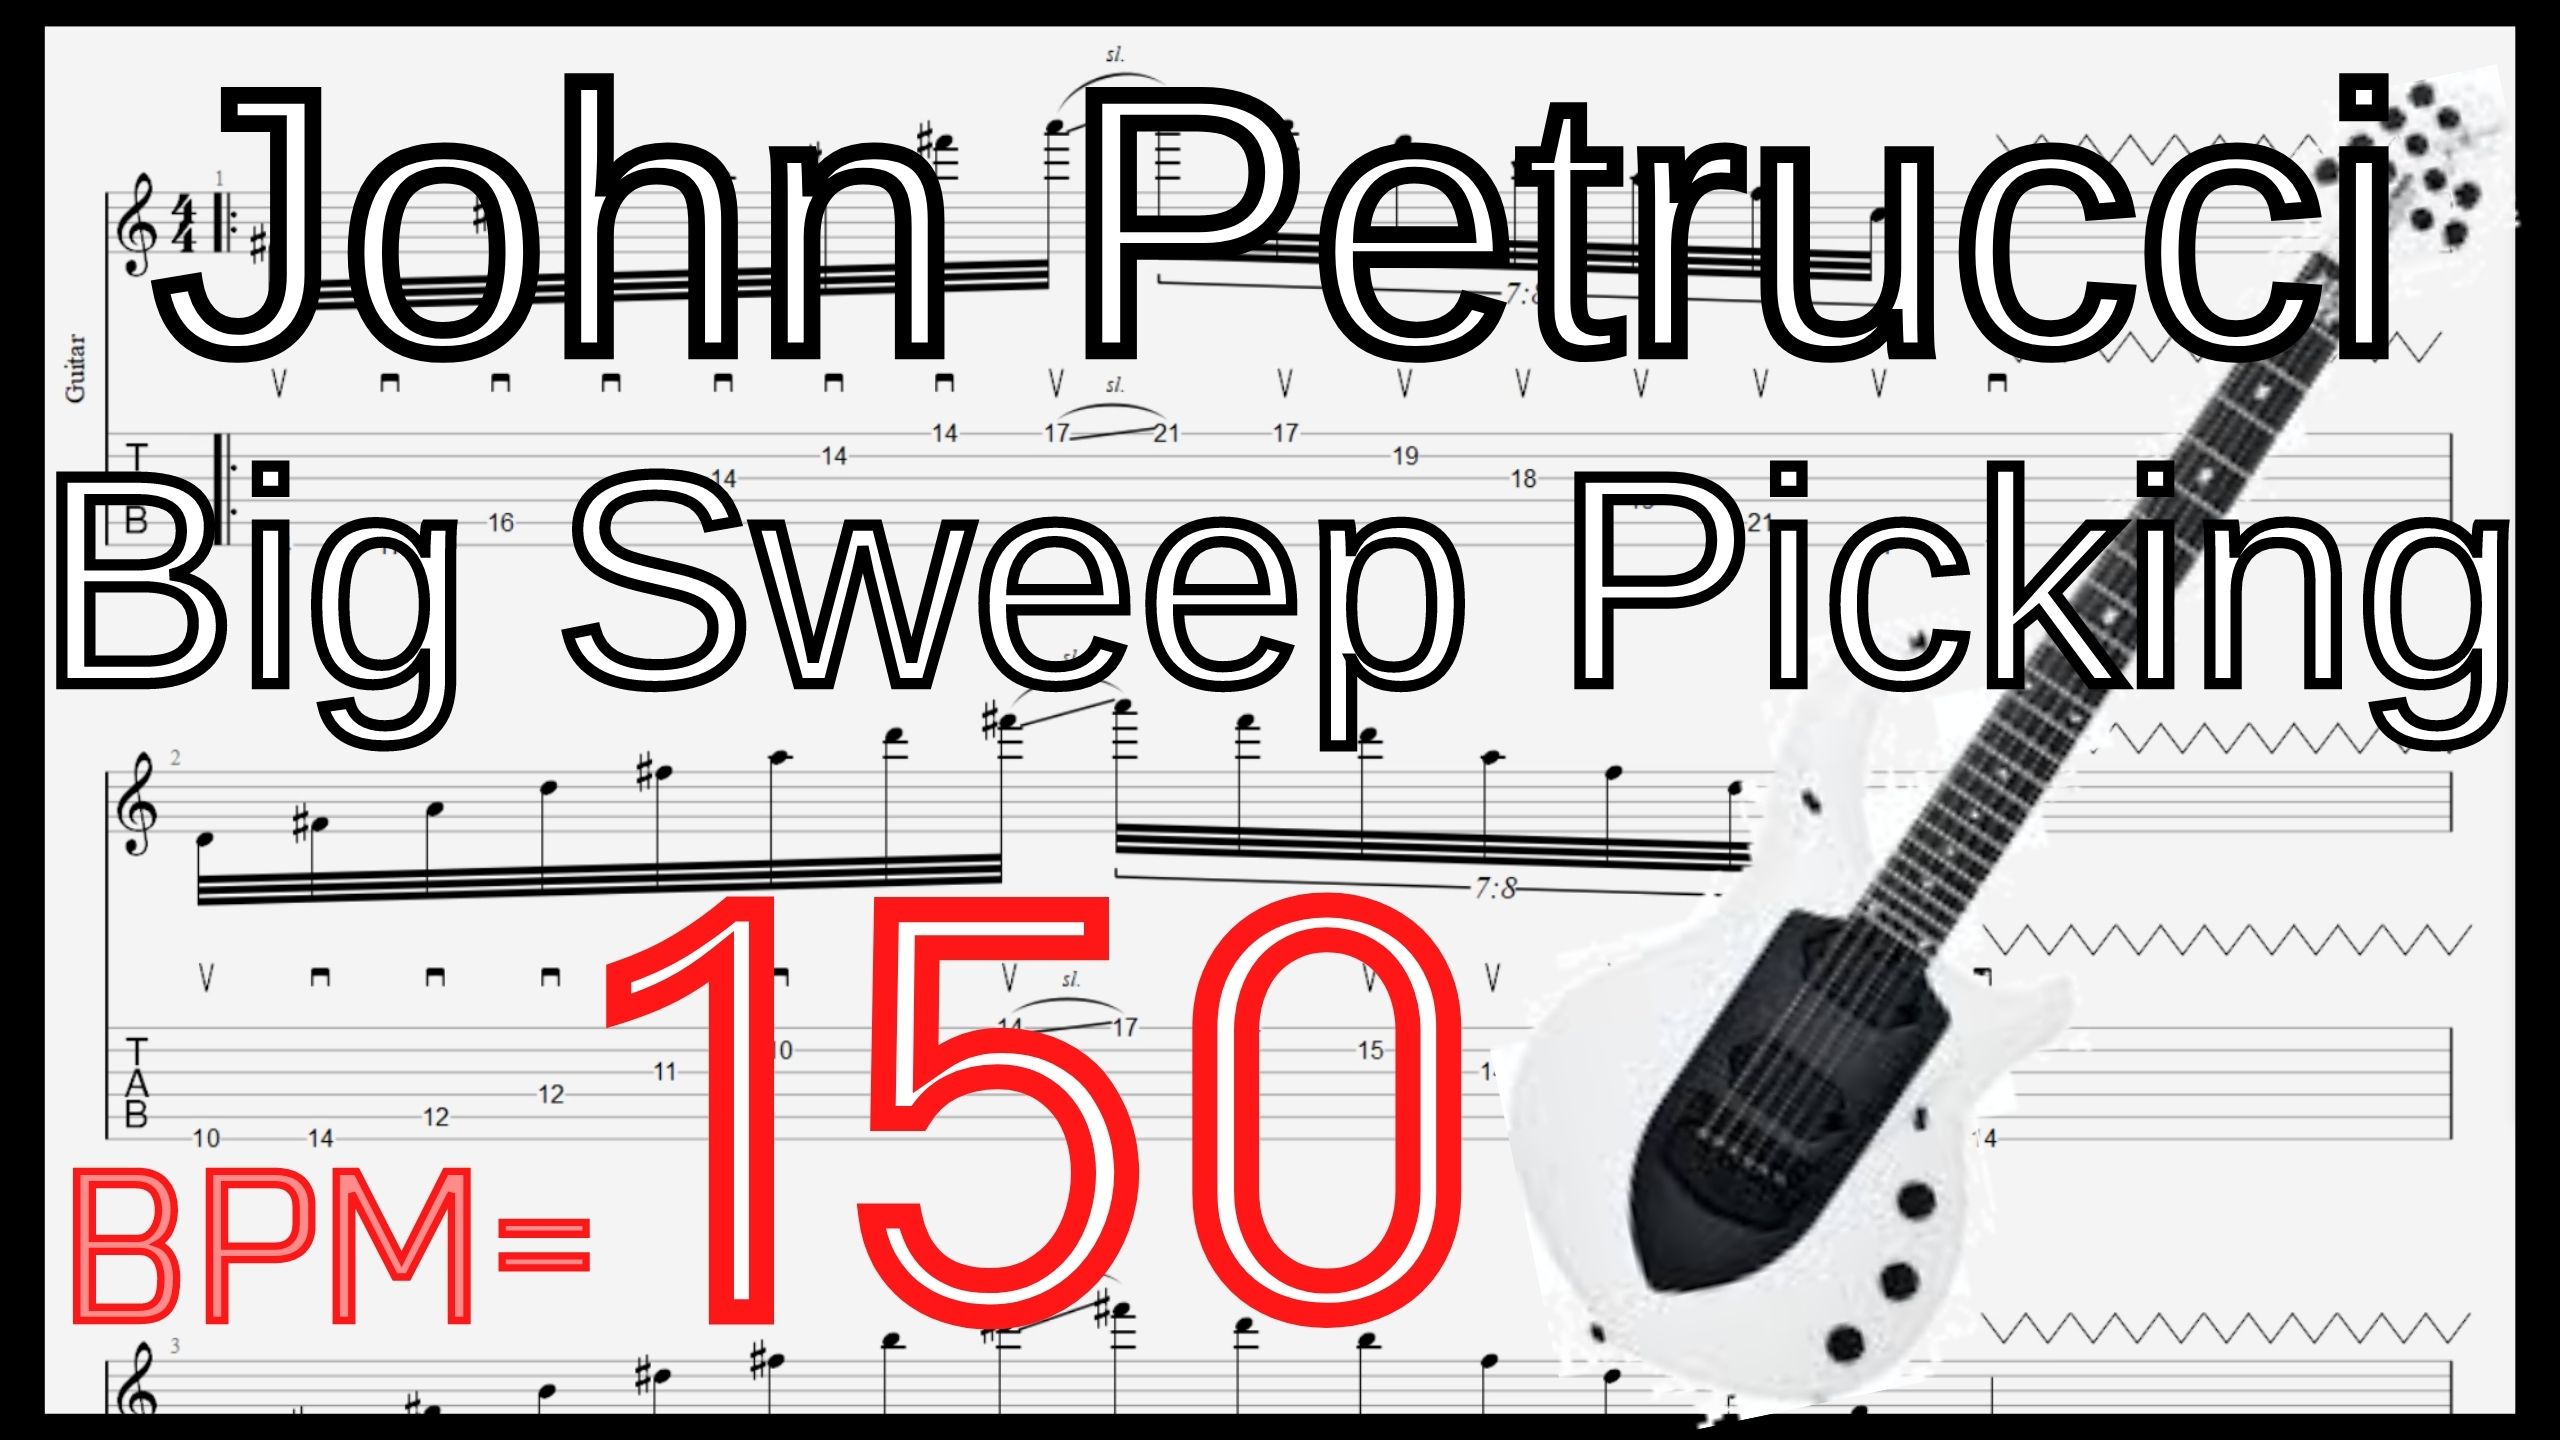 Guitar Sweep Best Practice TAB3.Big Sweep Picking John Petrucci 6弦スウィープピッキング ジョン･ペトルーシ 練習【Practice TAB】